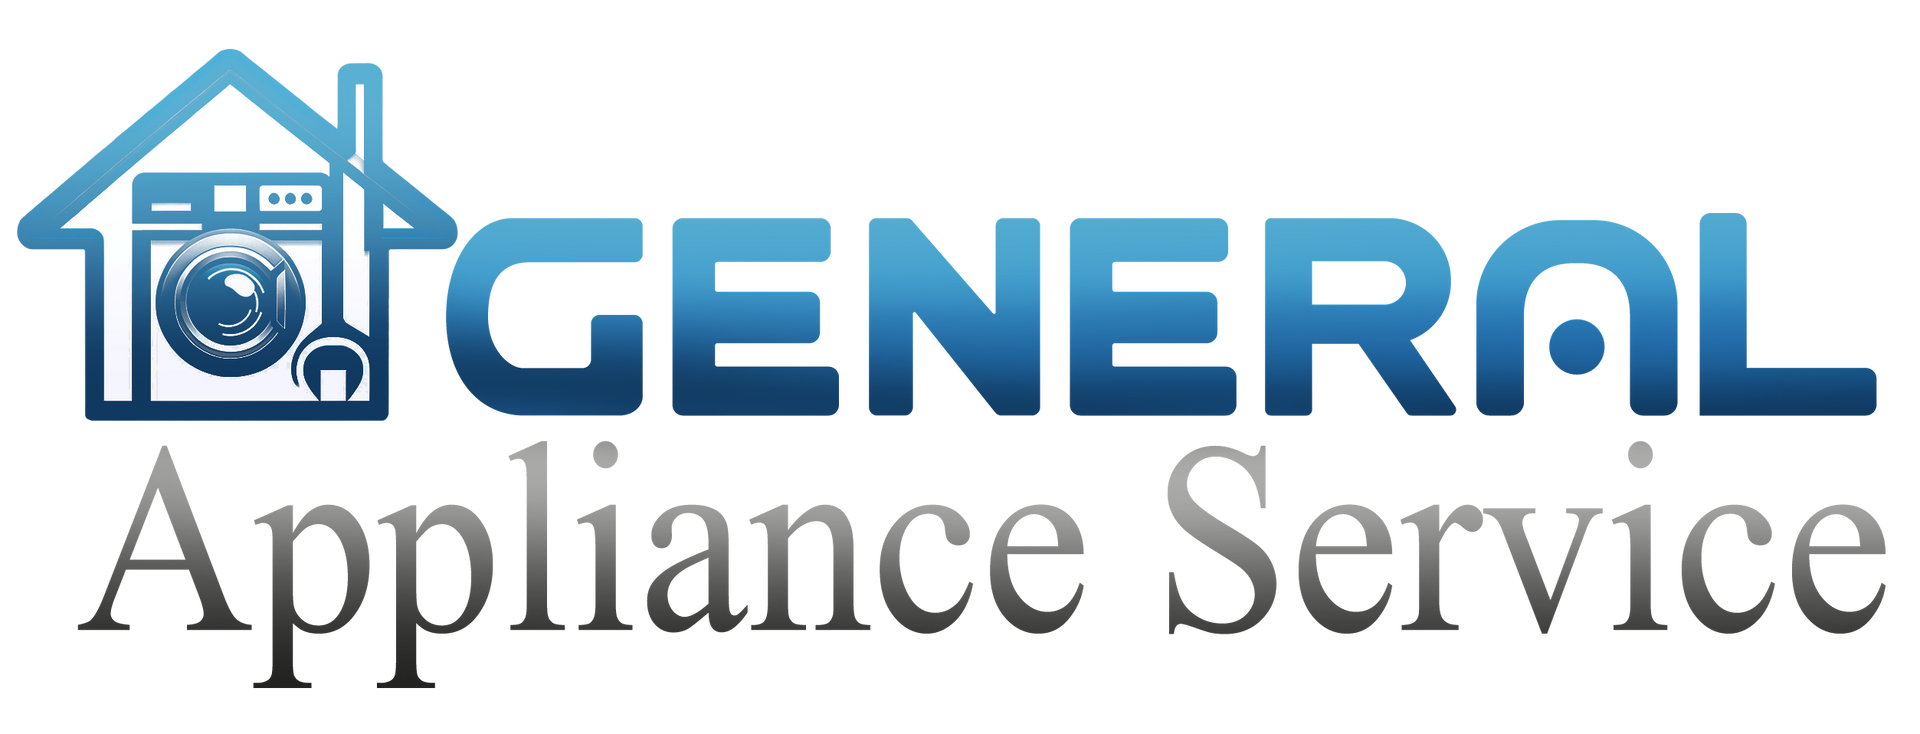 General Appliance Service 